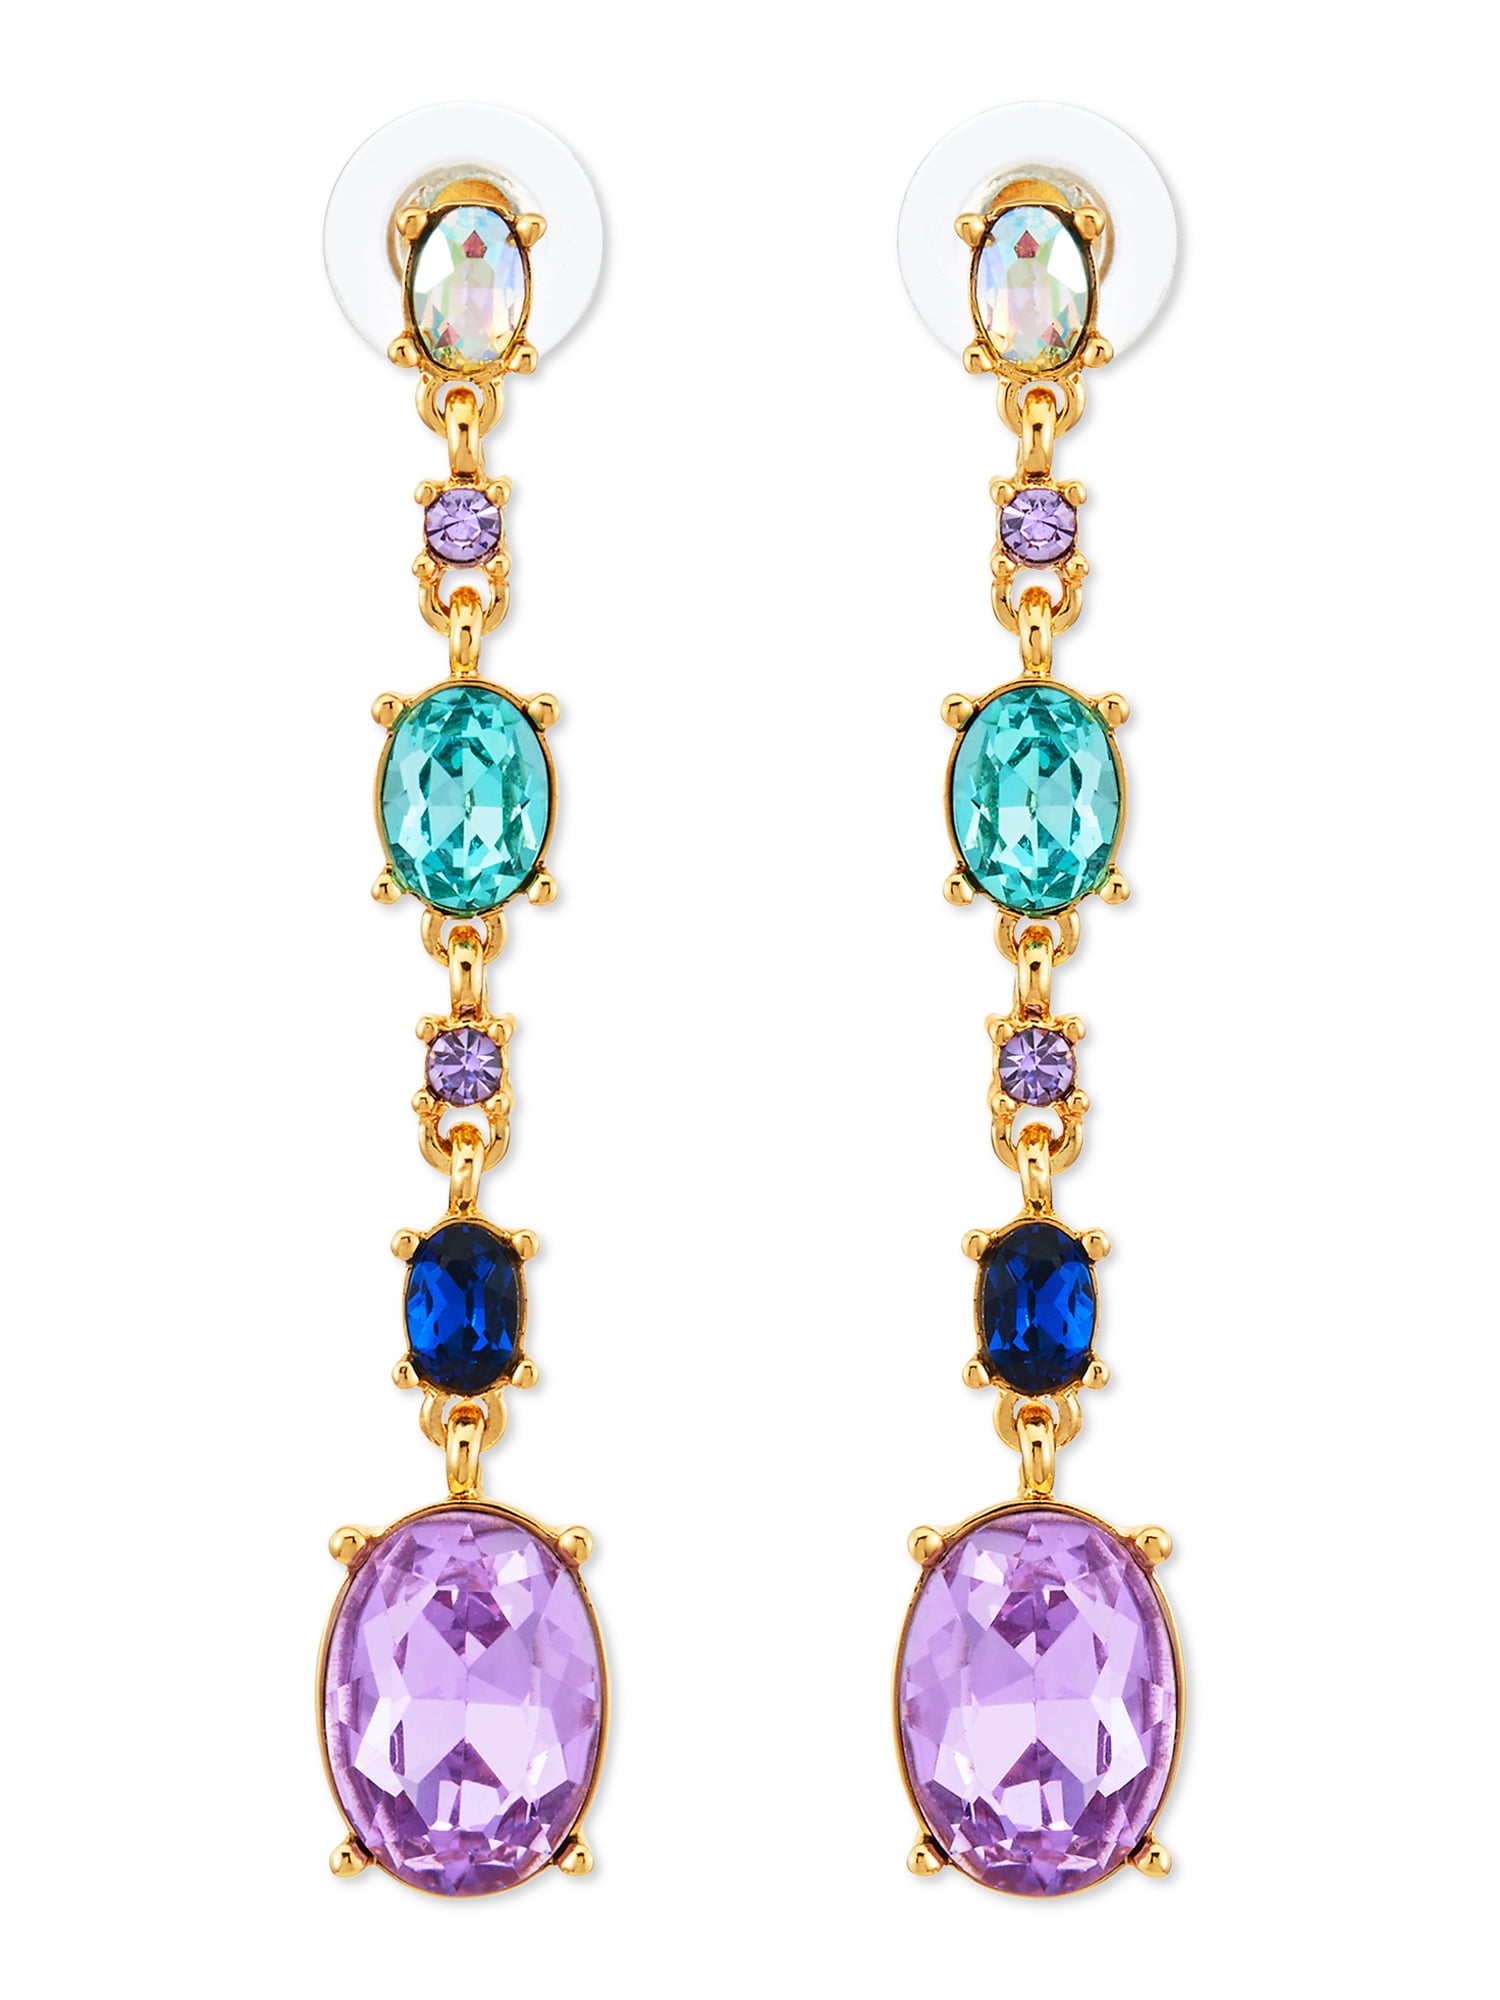 Party Earrings Glamorous Drop Earrings Crystal Dangle Earrings Elegant Statement Earrings Crystal Statement Earrings Gold And Purple